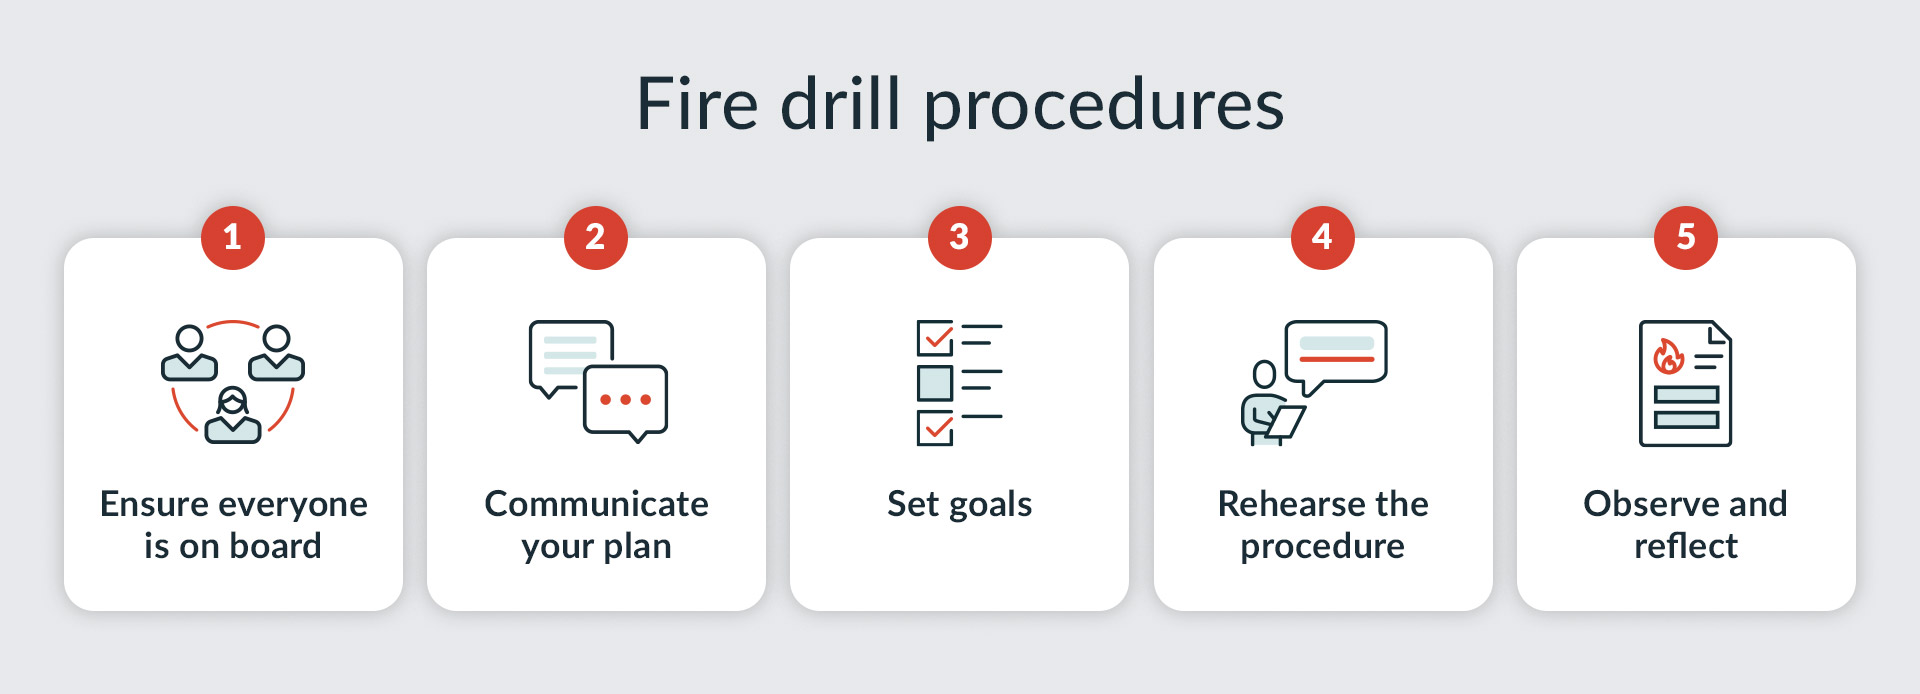 fire drill procedure steps